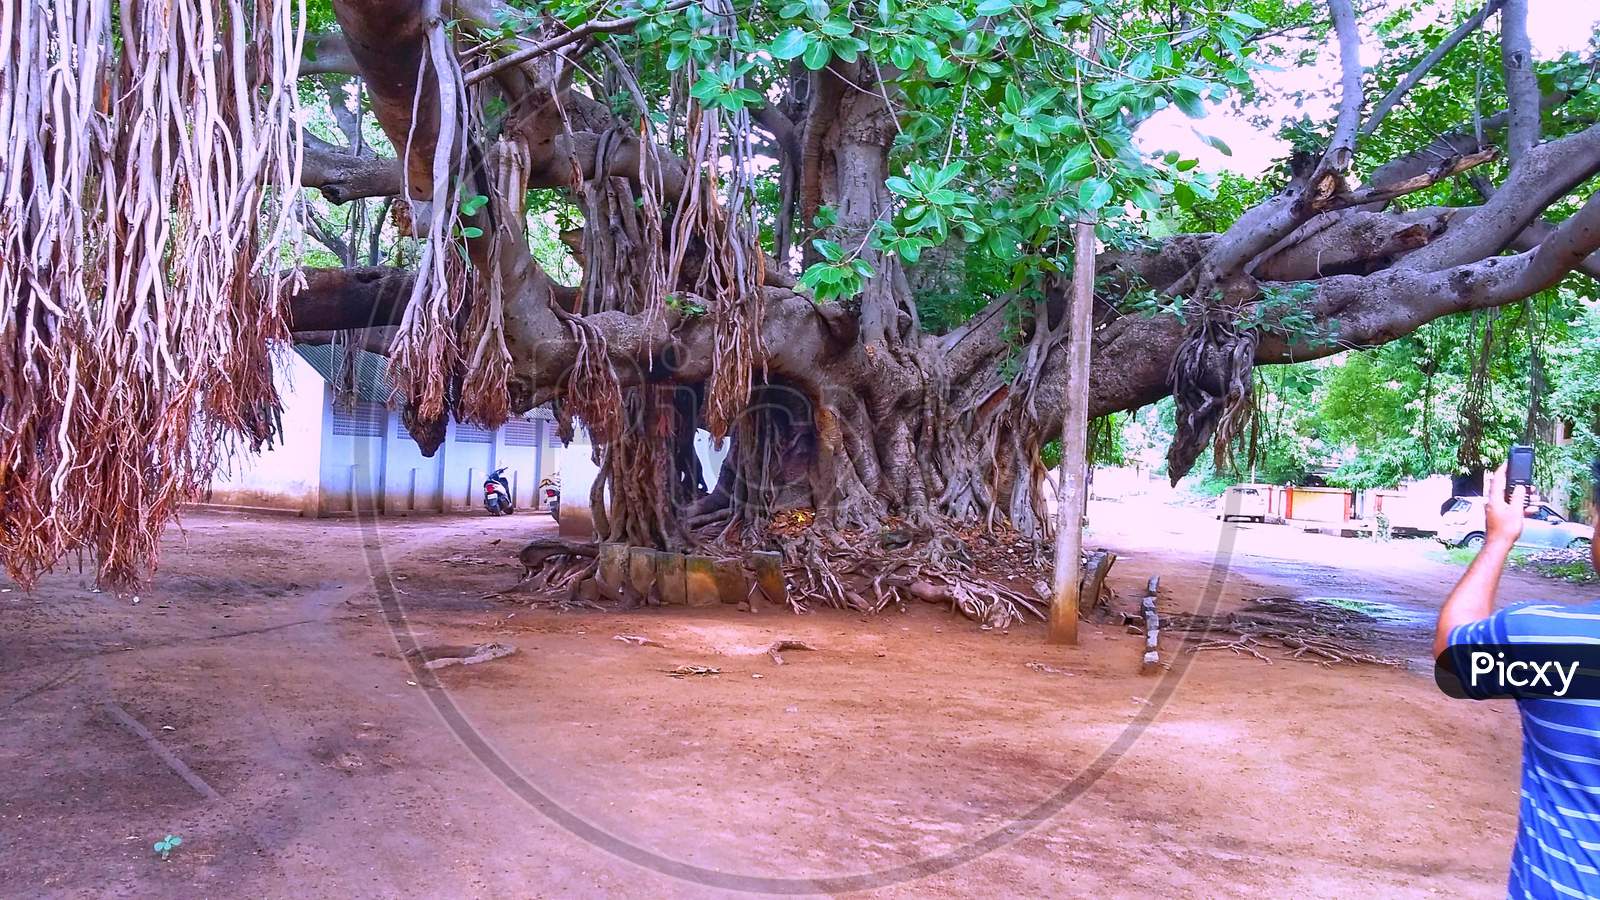 Big banyan tree and stem